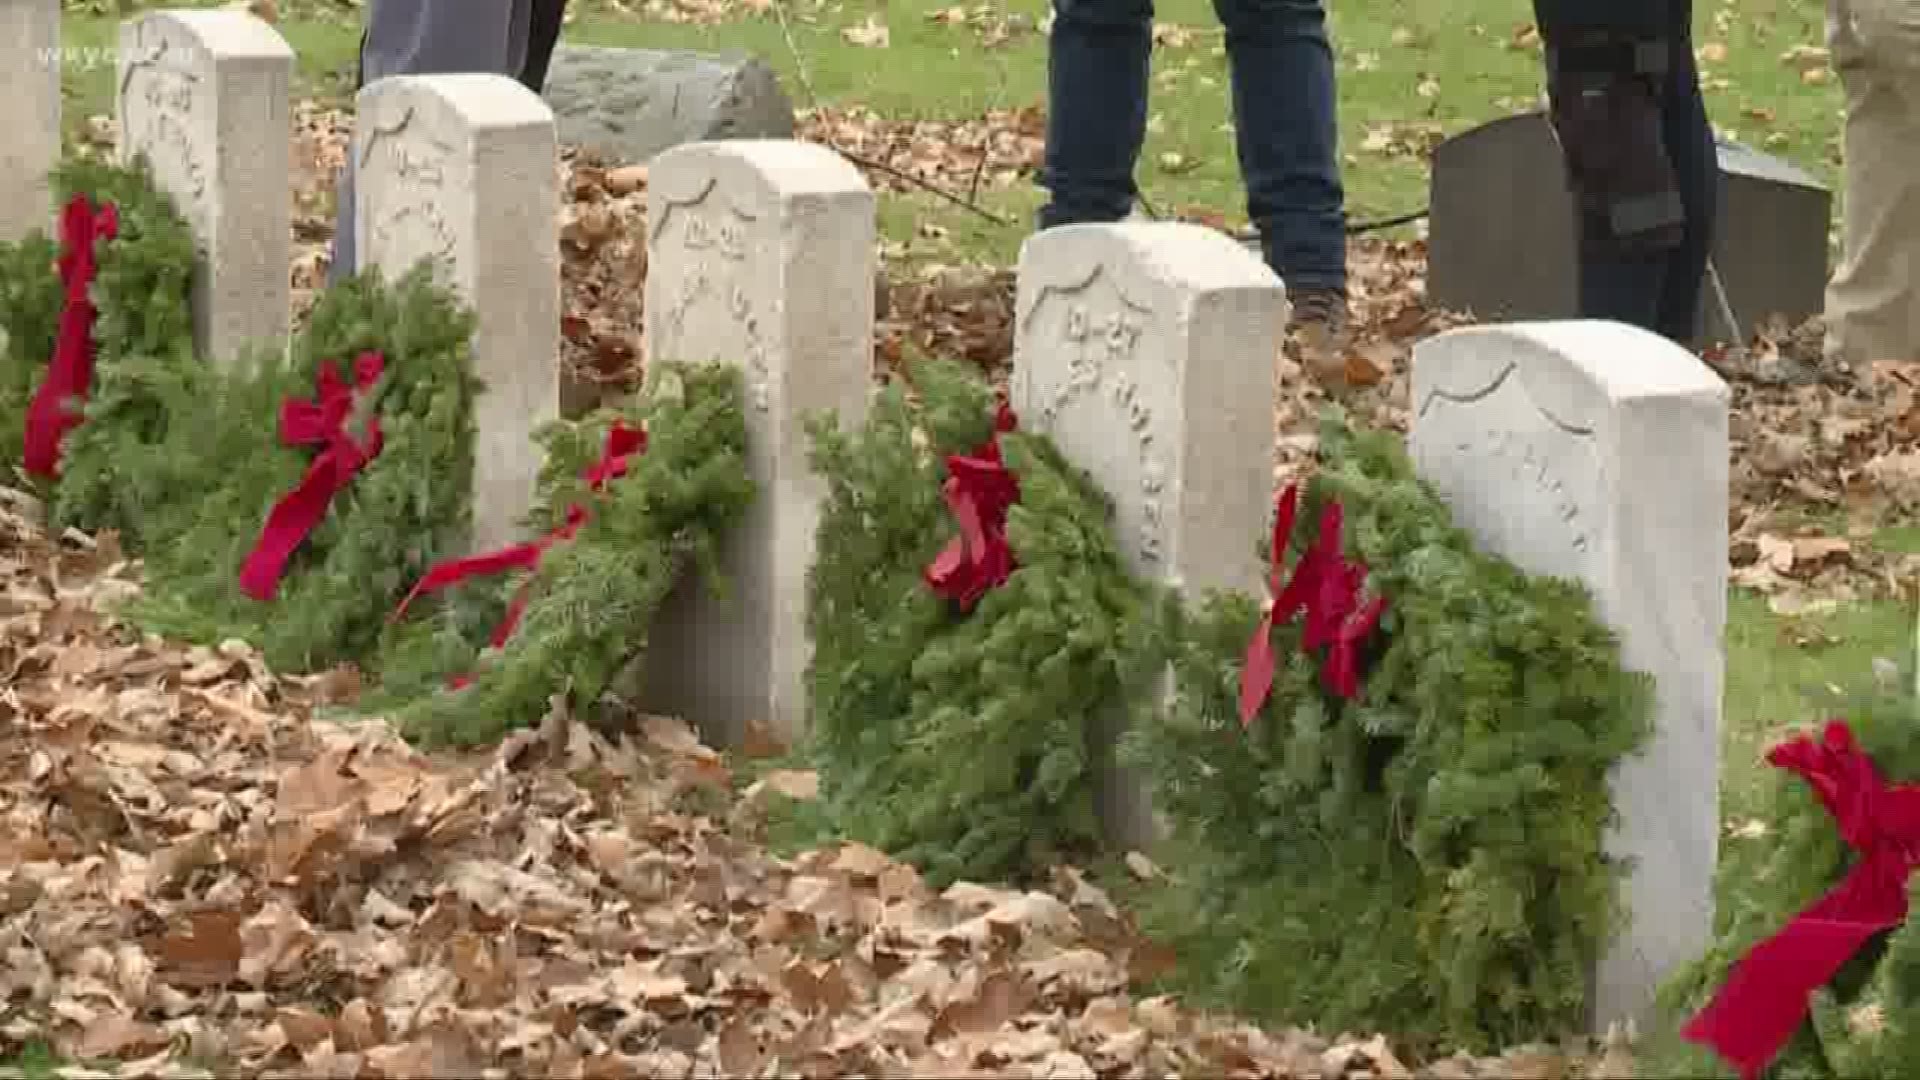 Wreaths across america remembers veterans this holiday season